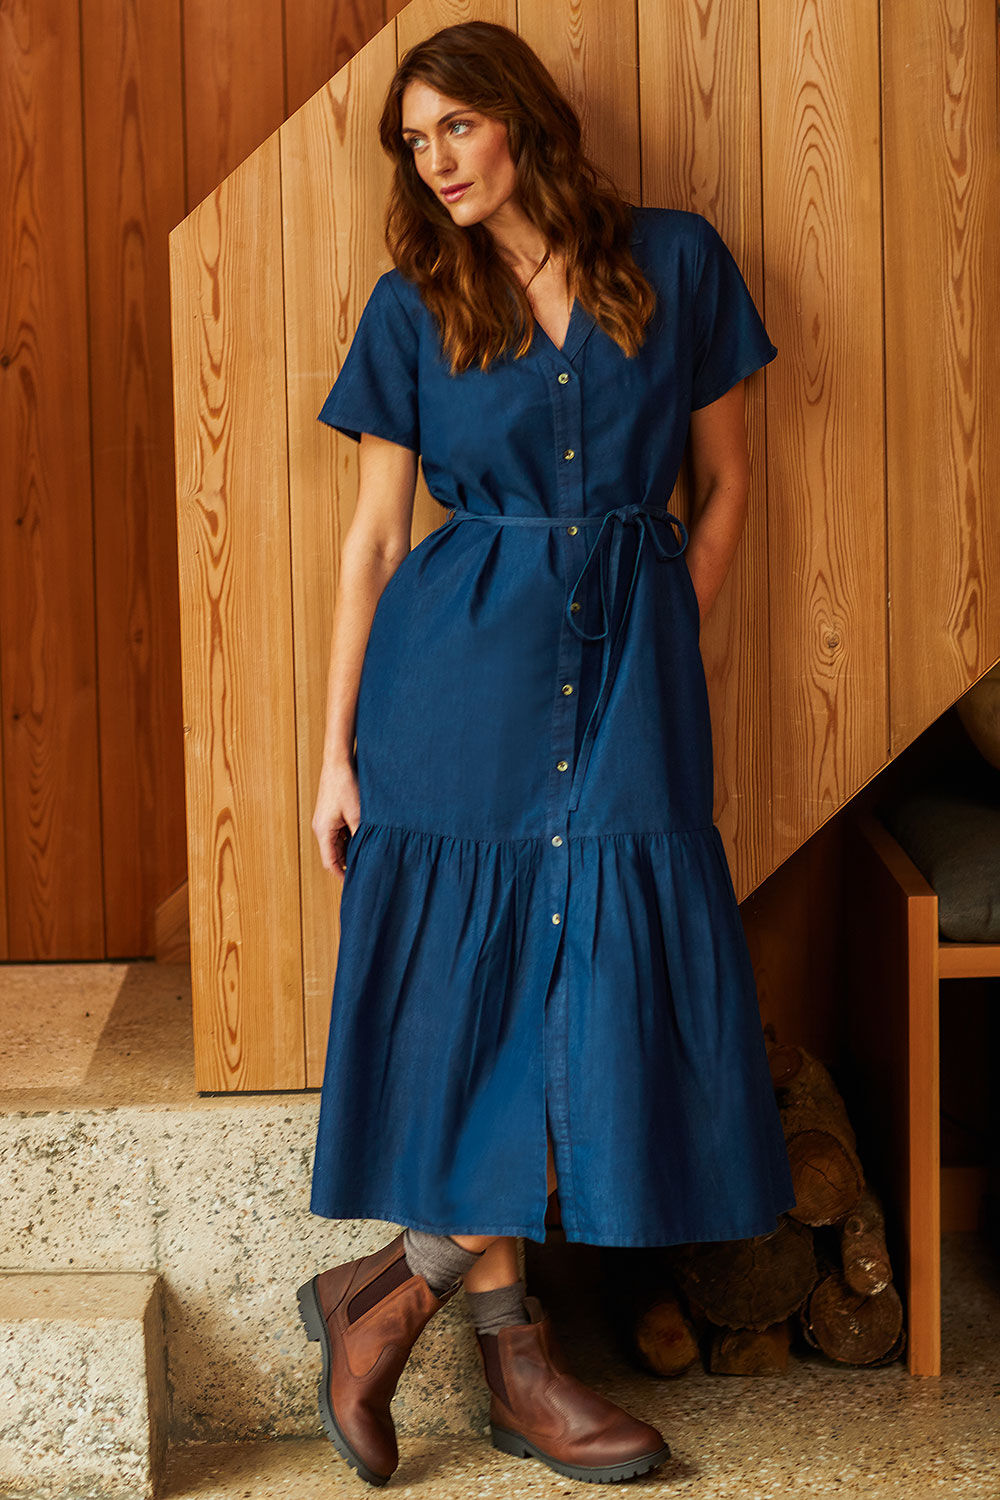 Autonomy Women’s Blue Cotton Denim Shirt Dress with Collar Neckline, Size: L